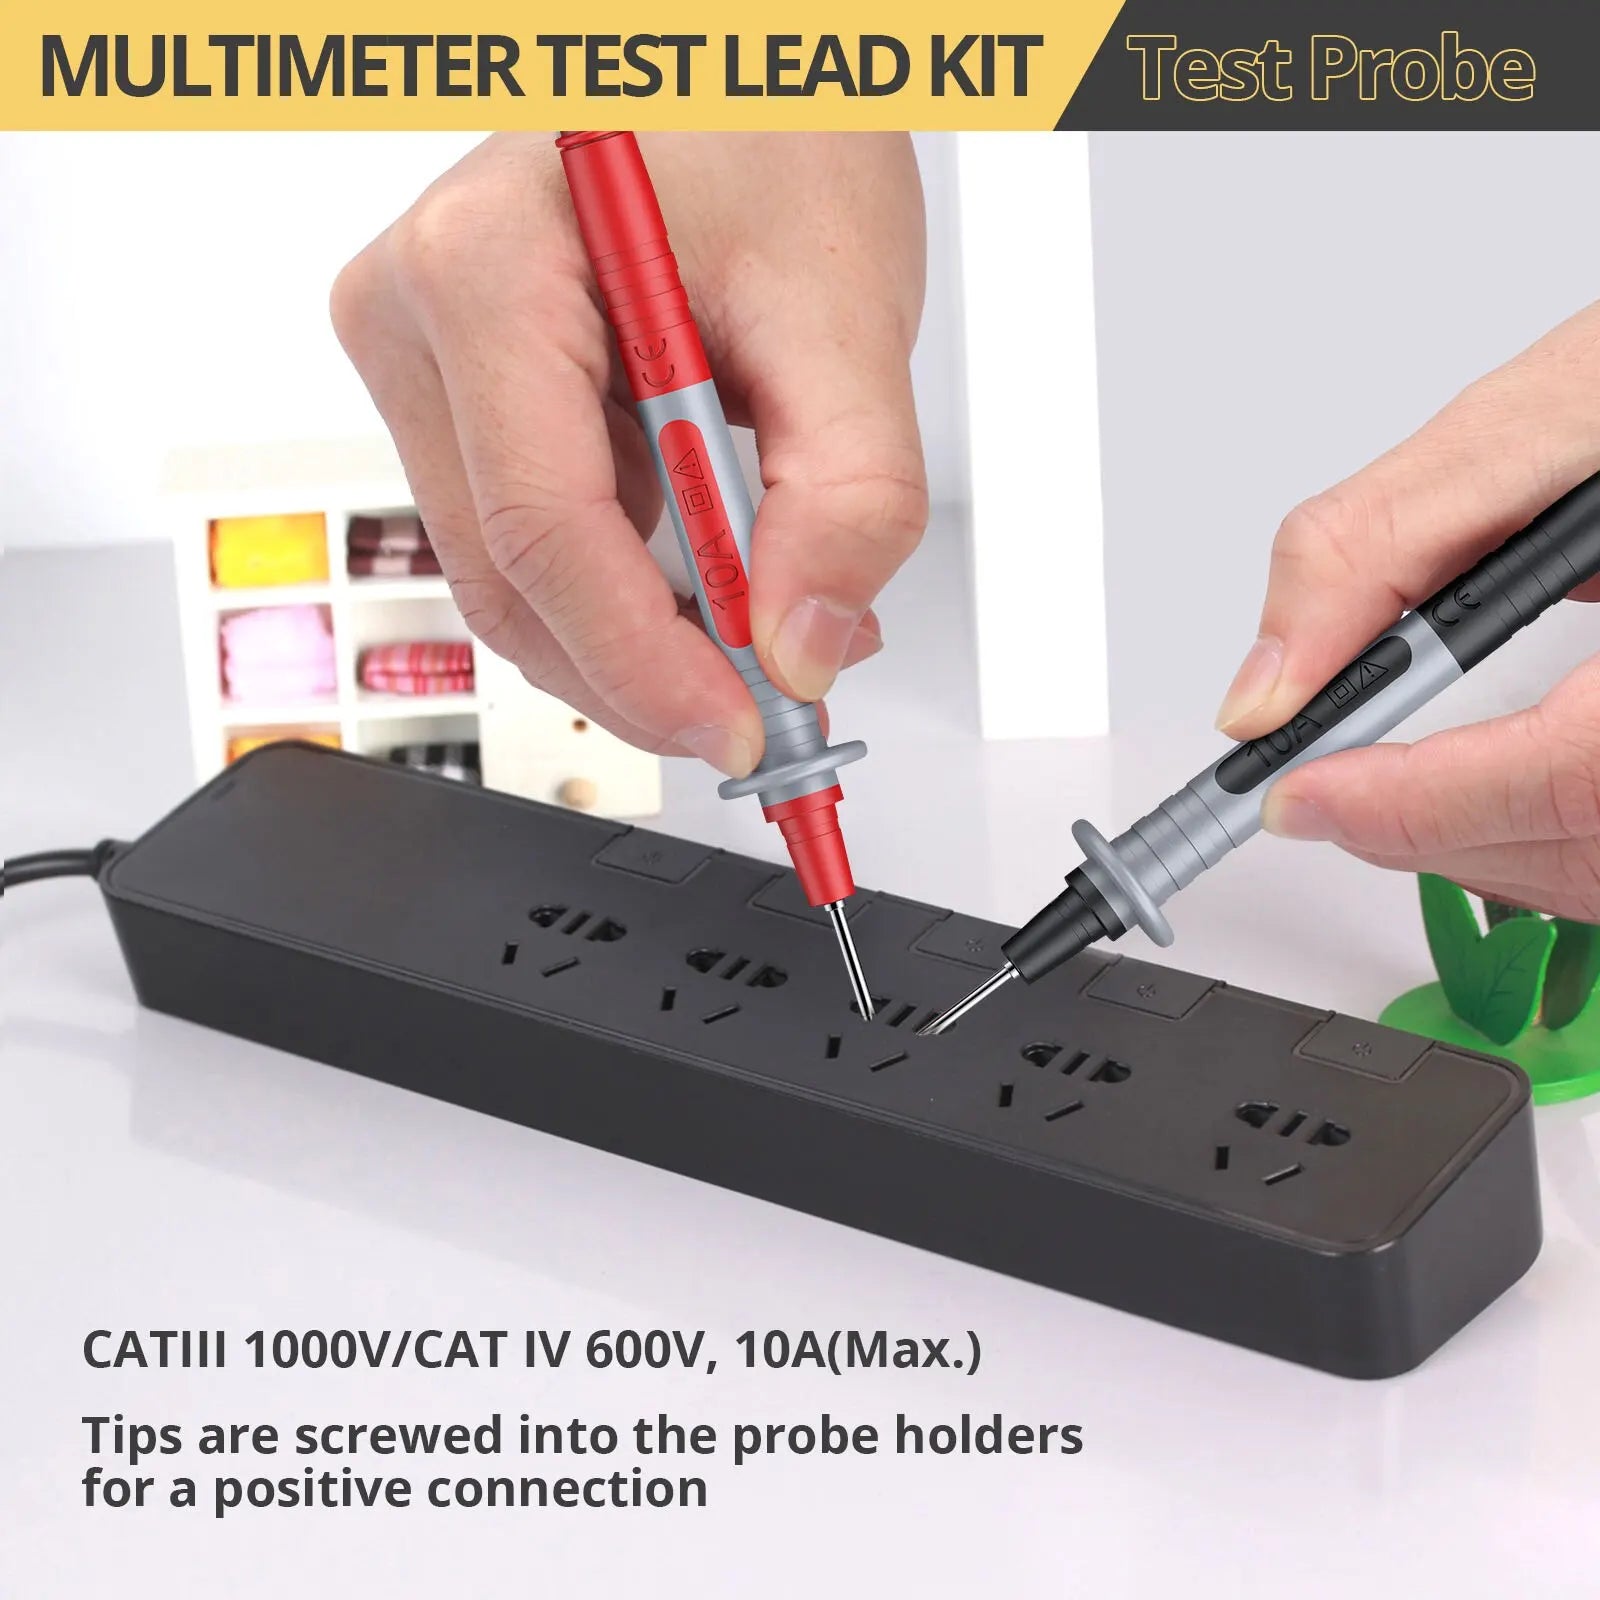 AMTOVL 24 In 1 Multi Test Leads Kit Electrical Multimeter Test Lead With Alligator Clips Test Probe Spring Grabber Banana Plug